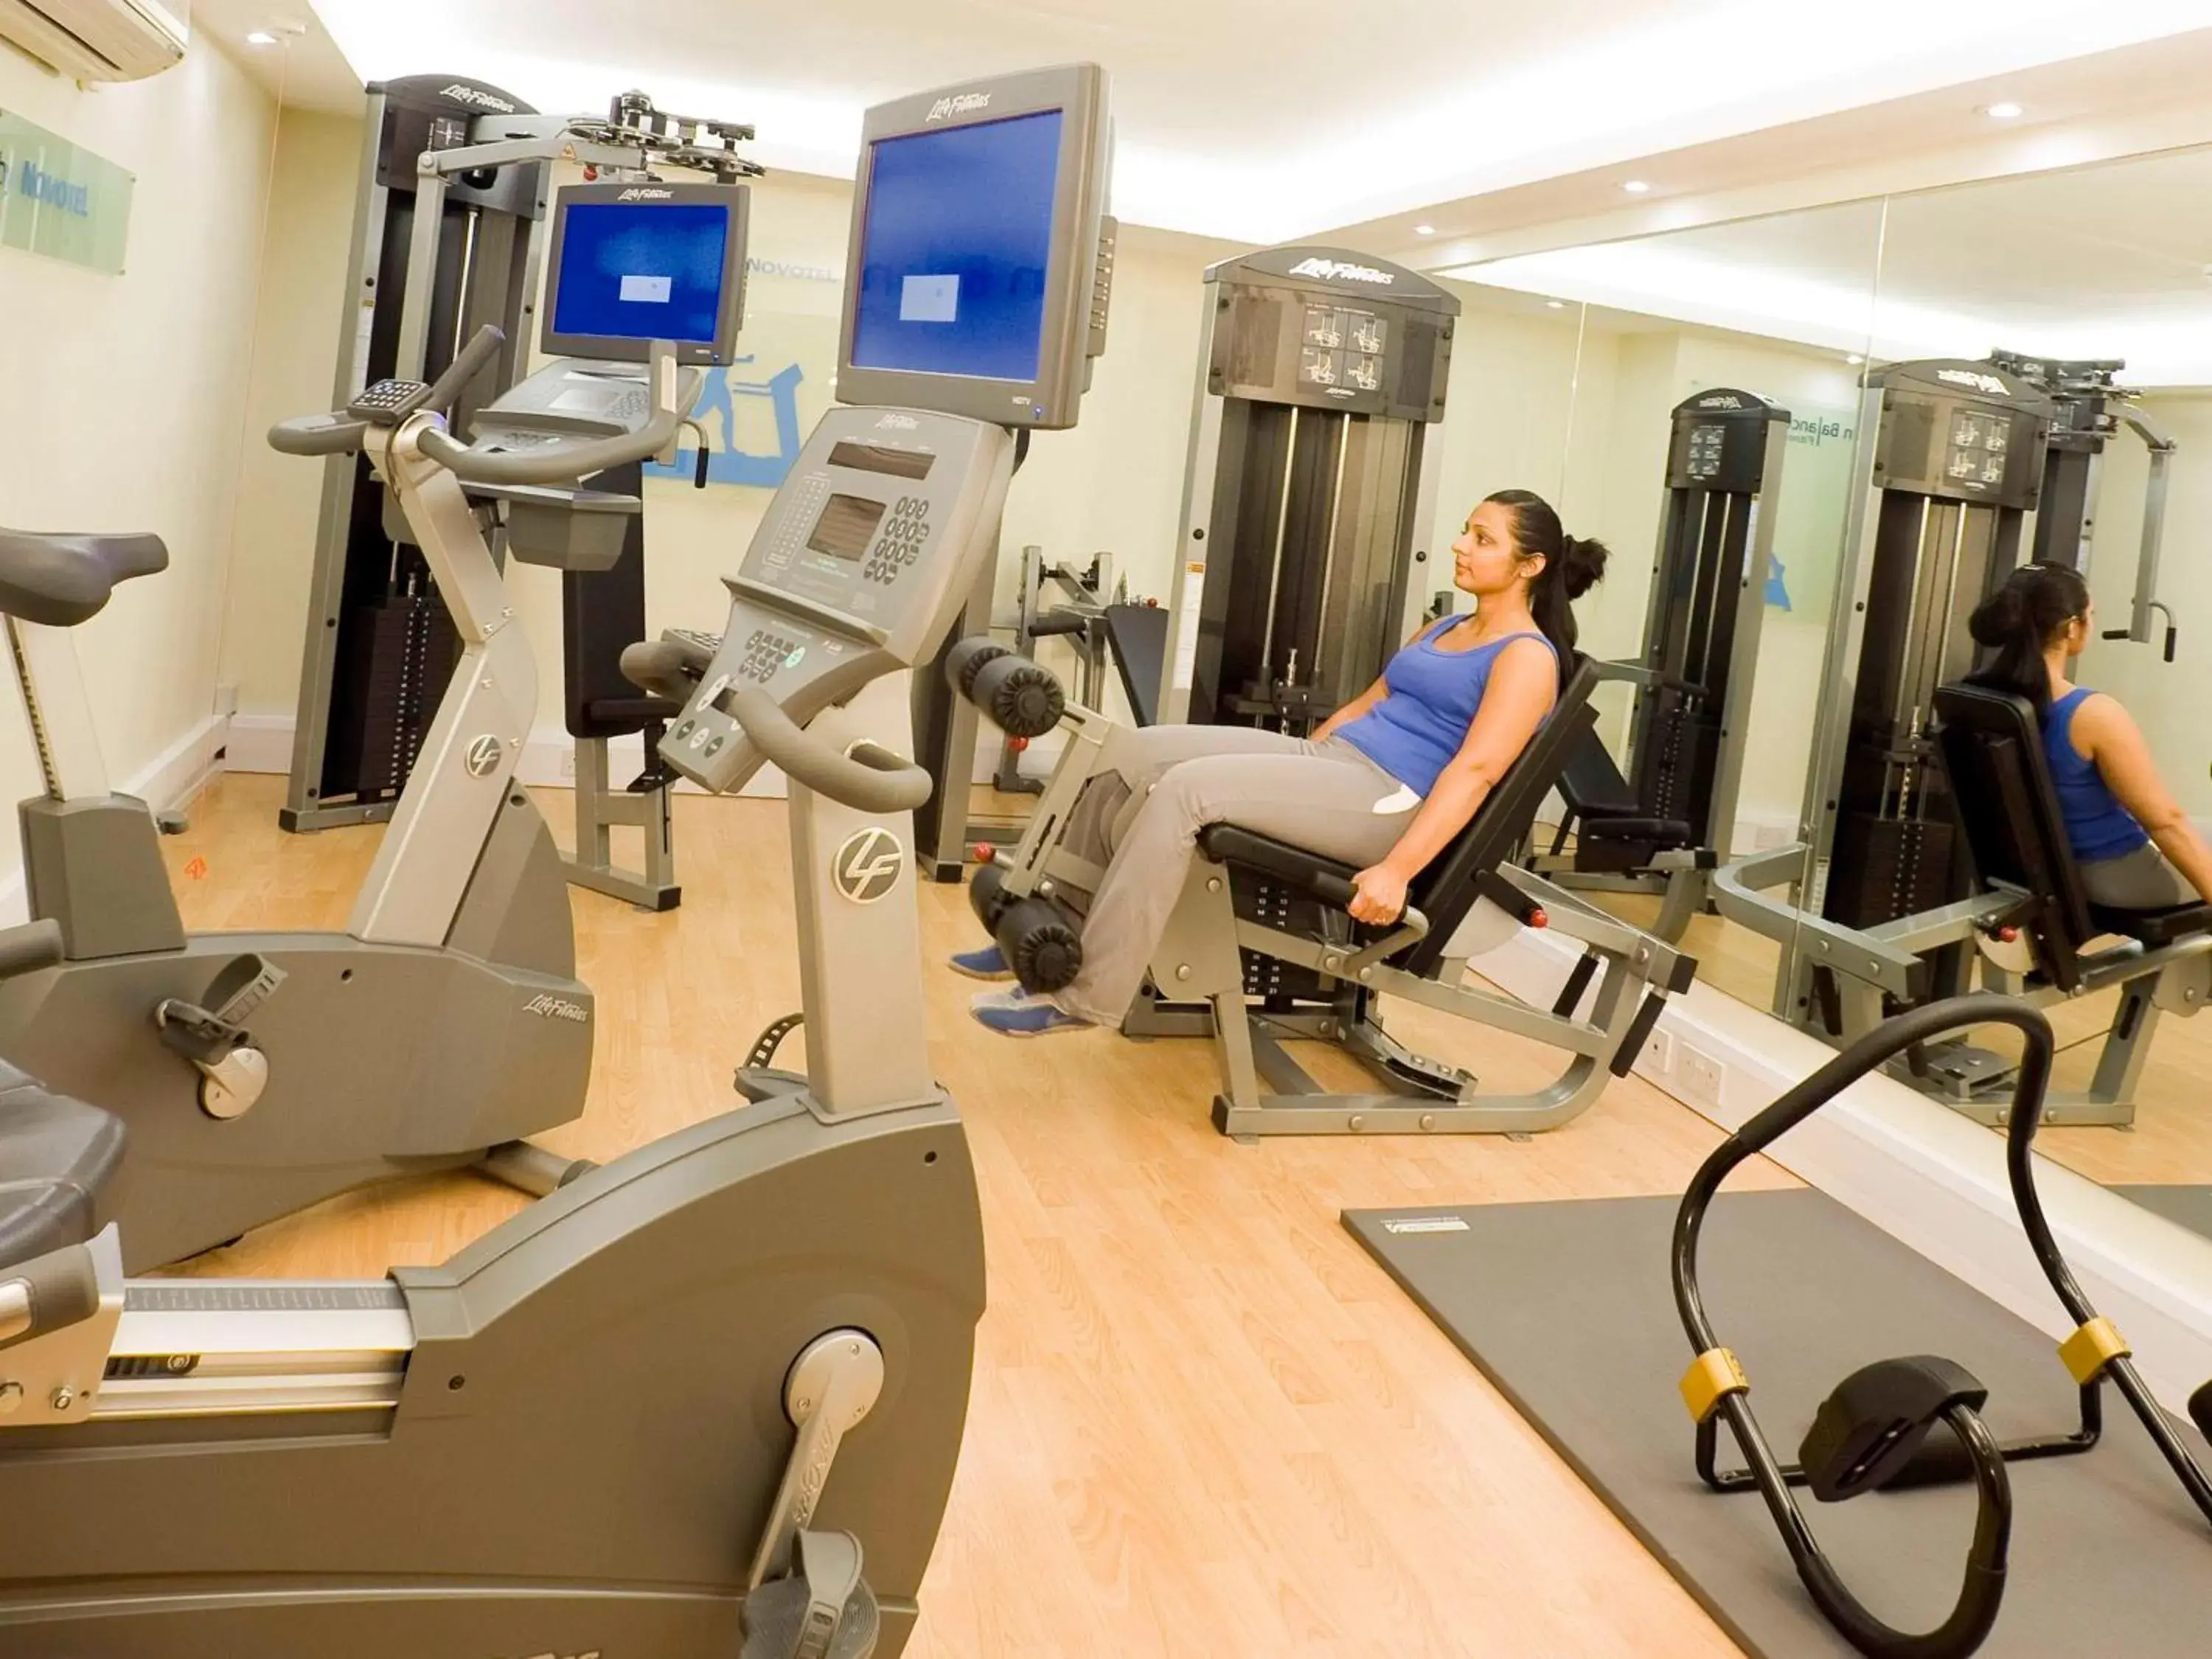 Fitness centre/facilities, Fitness Center/Facilities in Novotel Birmingham Airport